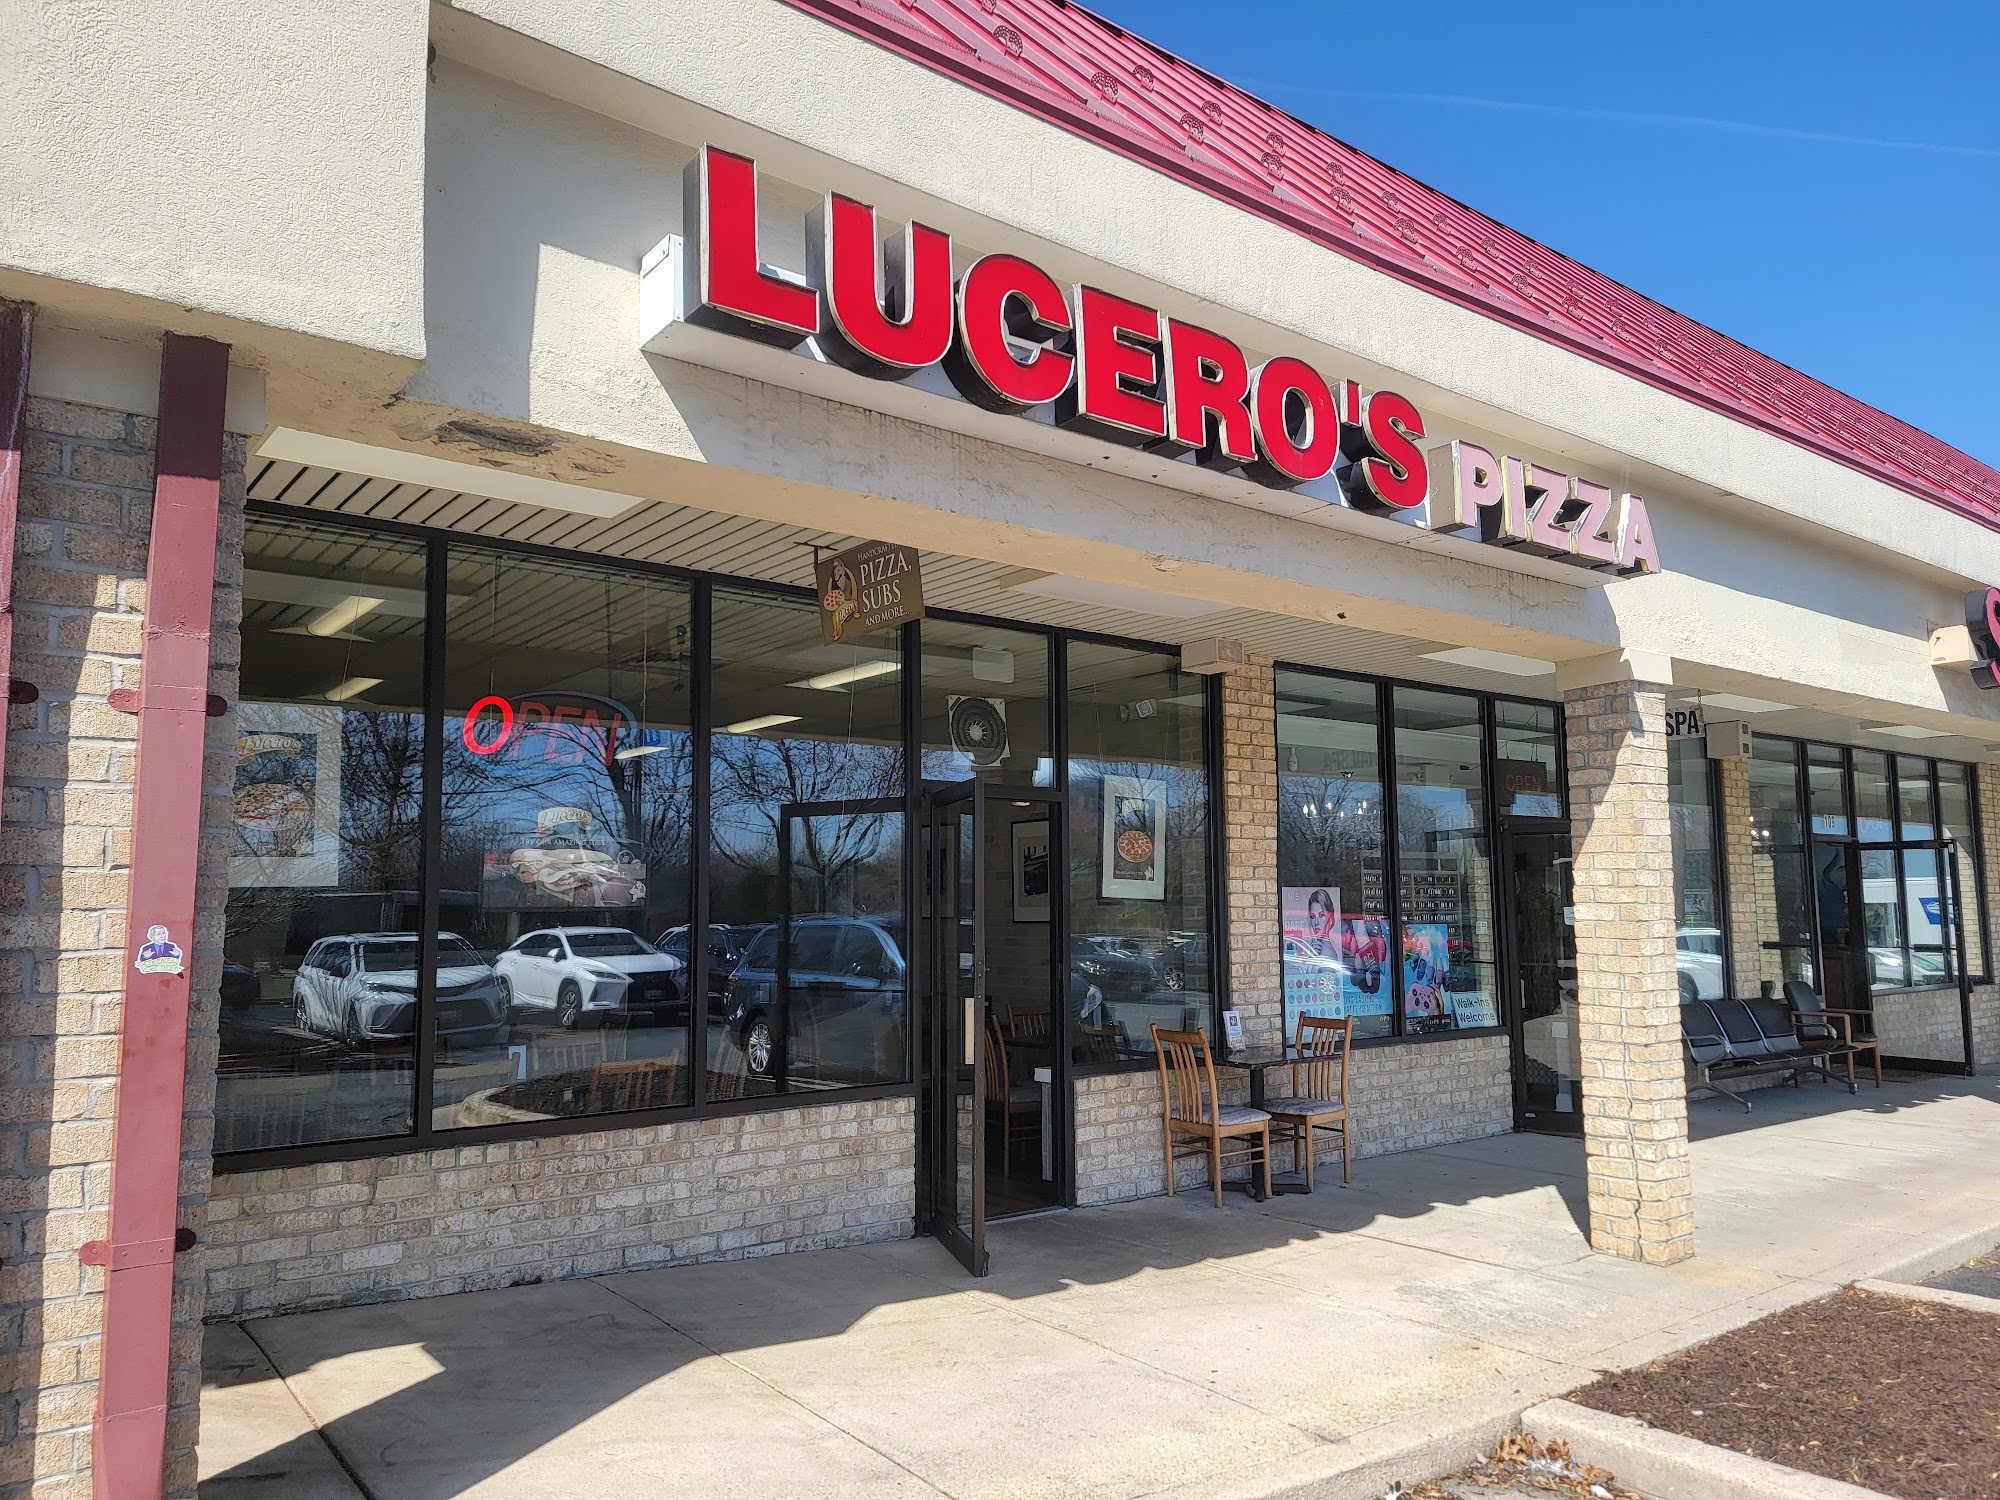 Lucero's Pizza